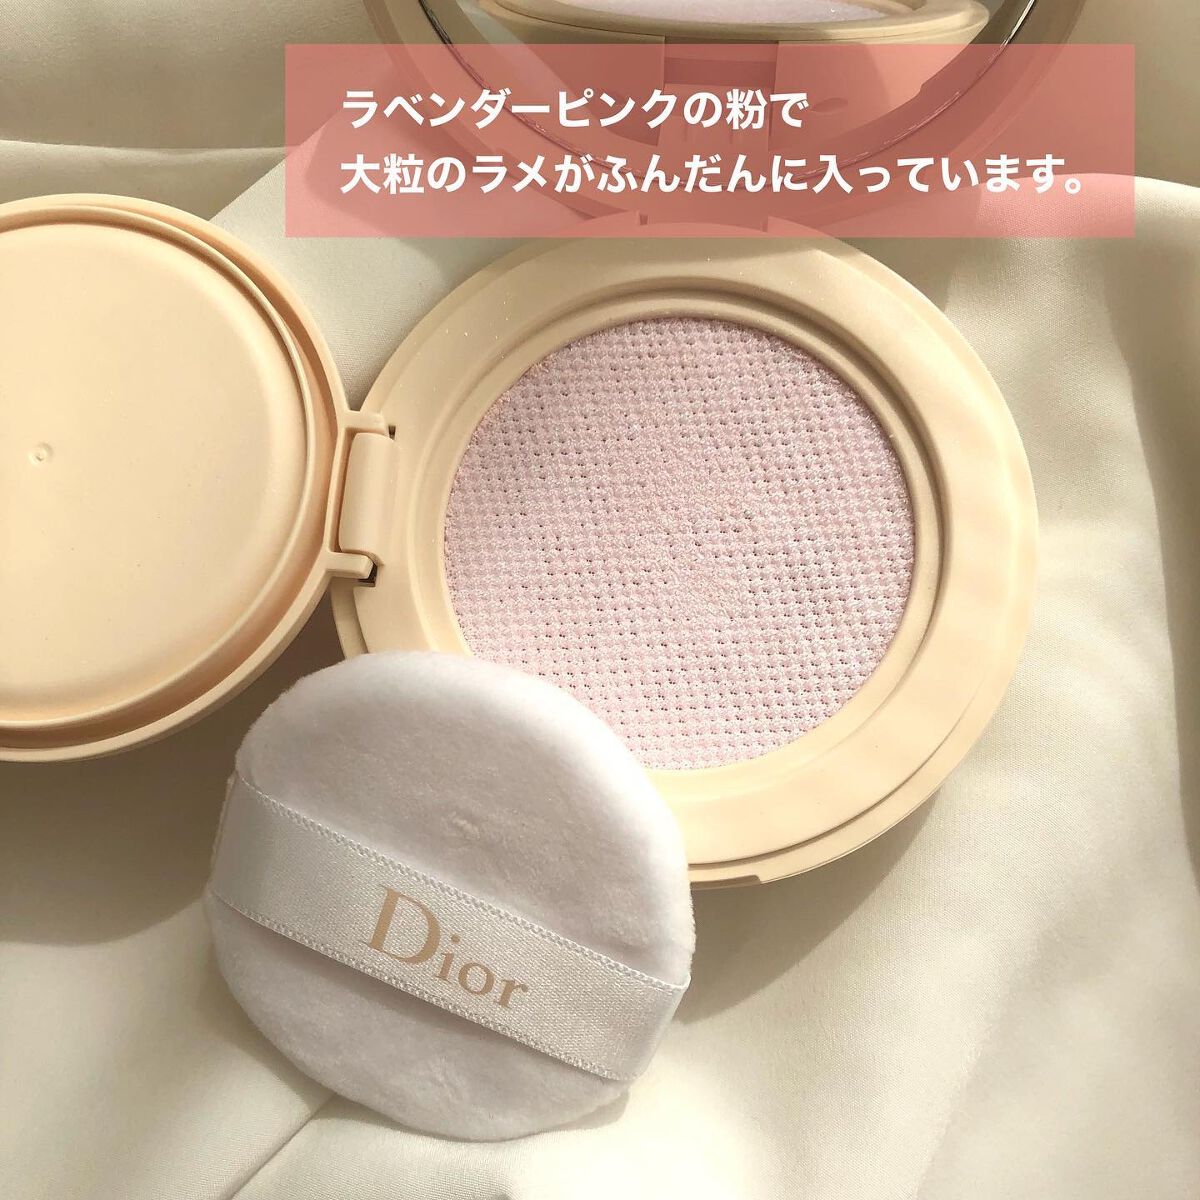 Dior ♡ フェイスパウダー ♡ 09